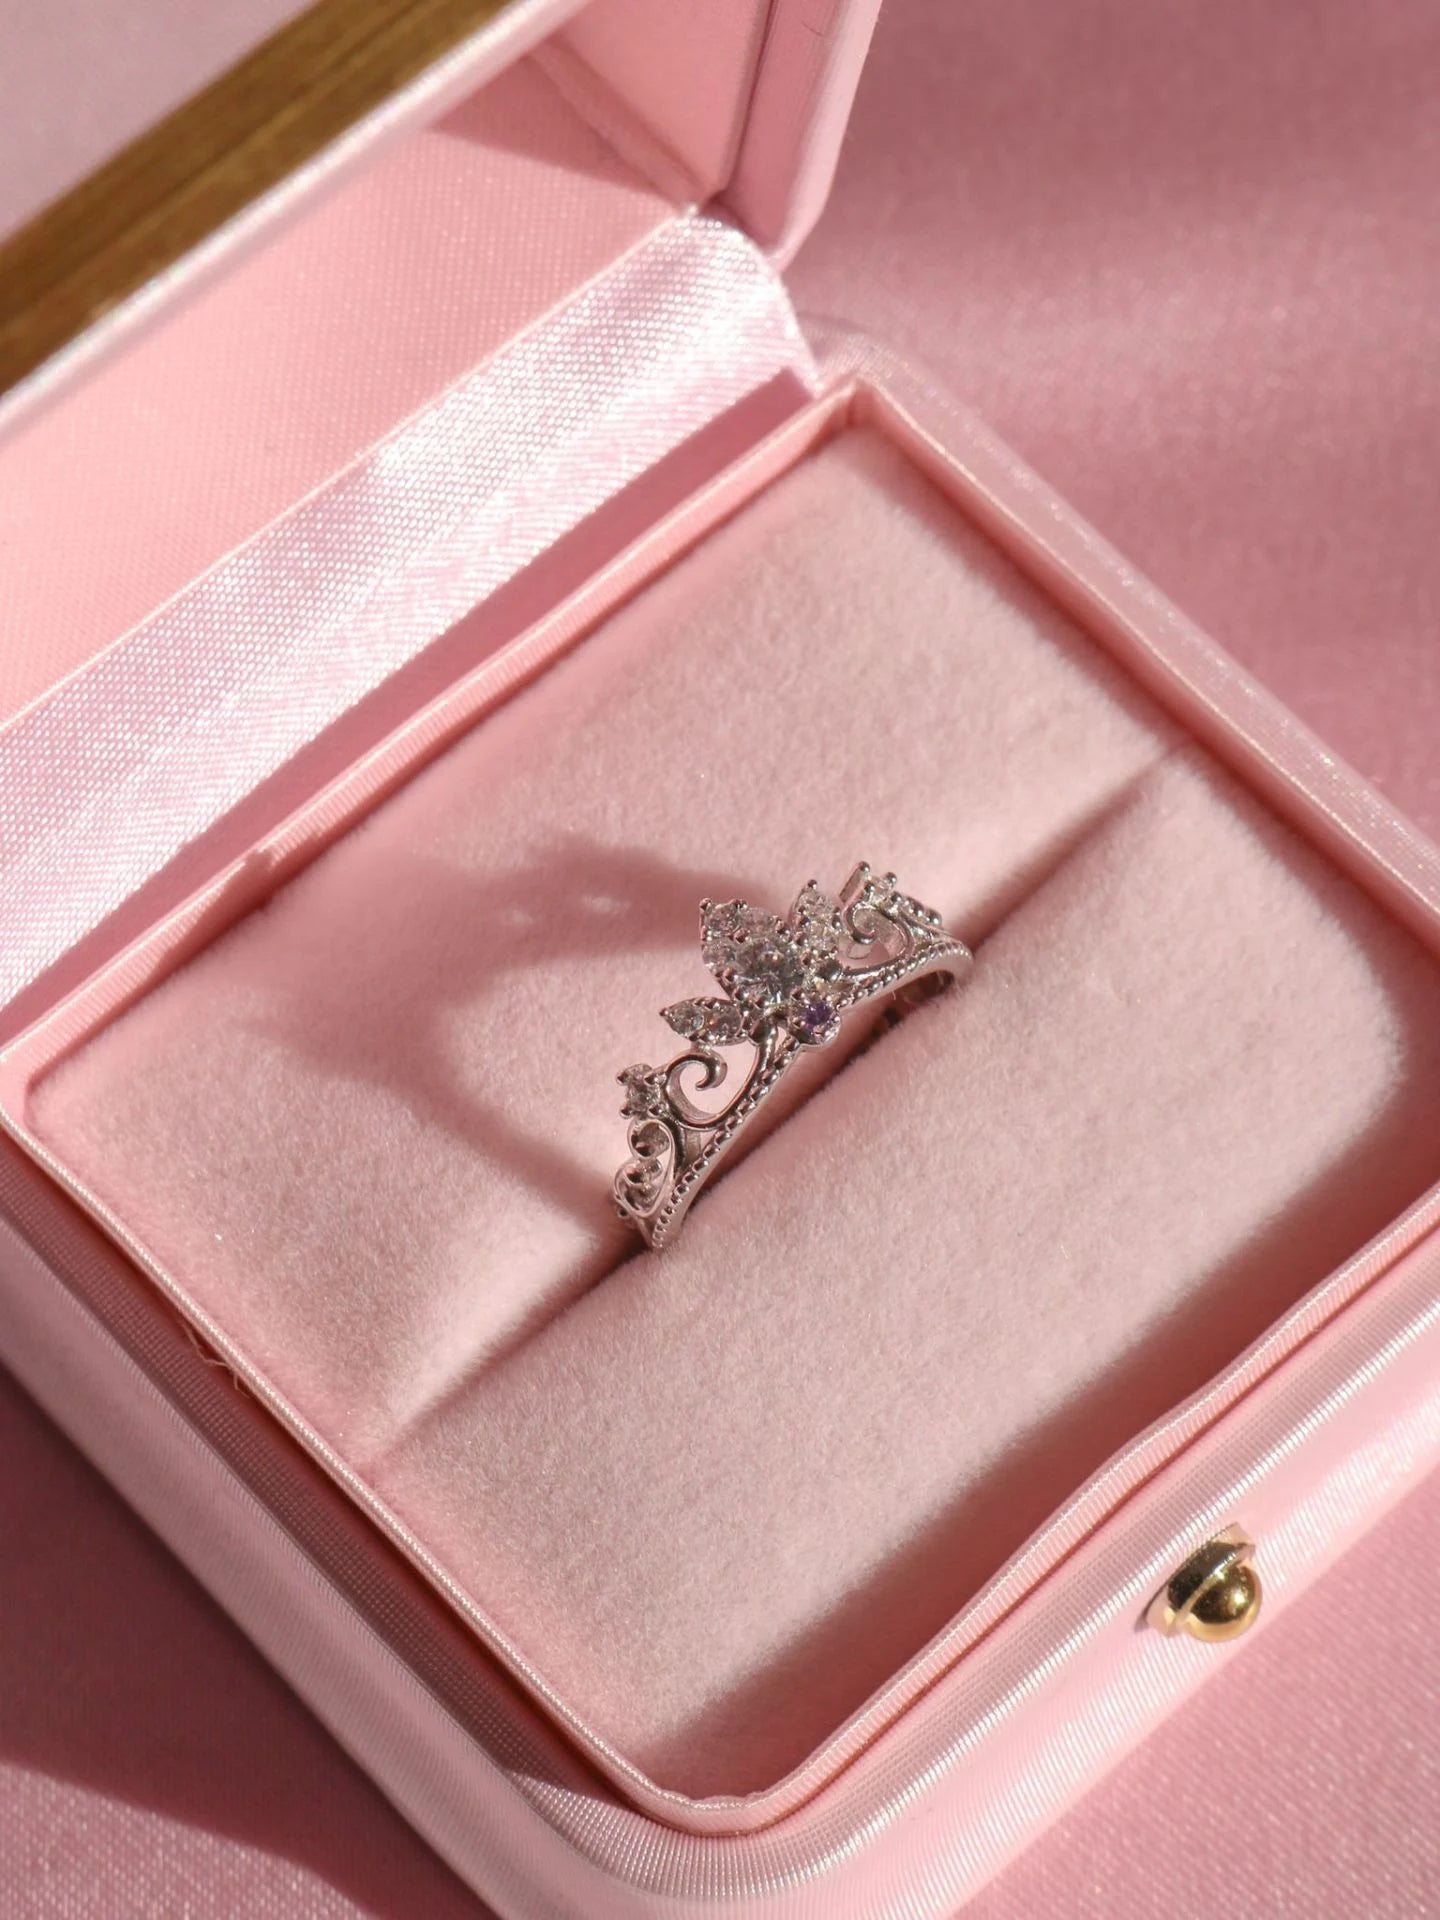 Rapunzel Royal Crown Ring, 925 Sterling Silver, Lost Princess Ring 